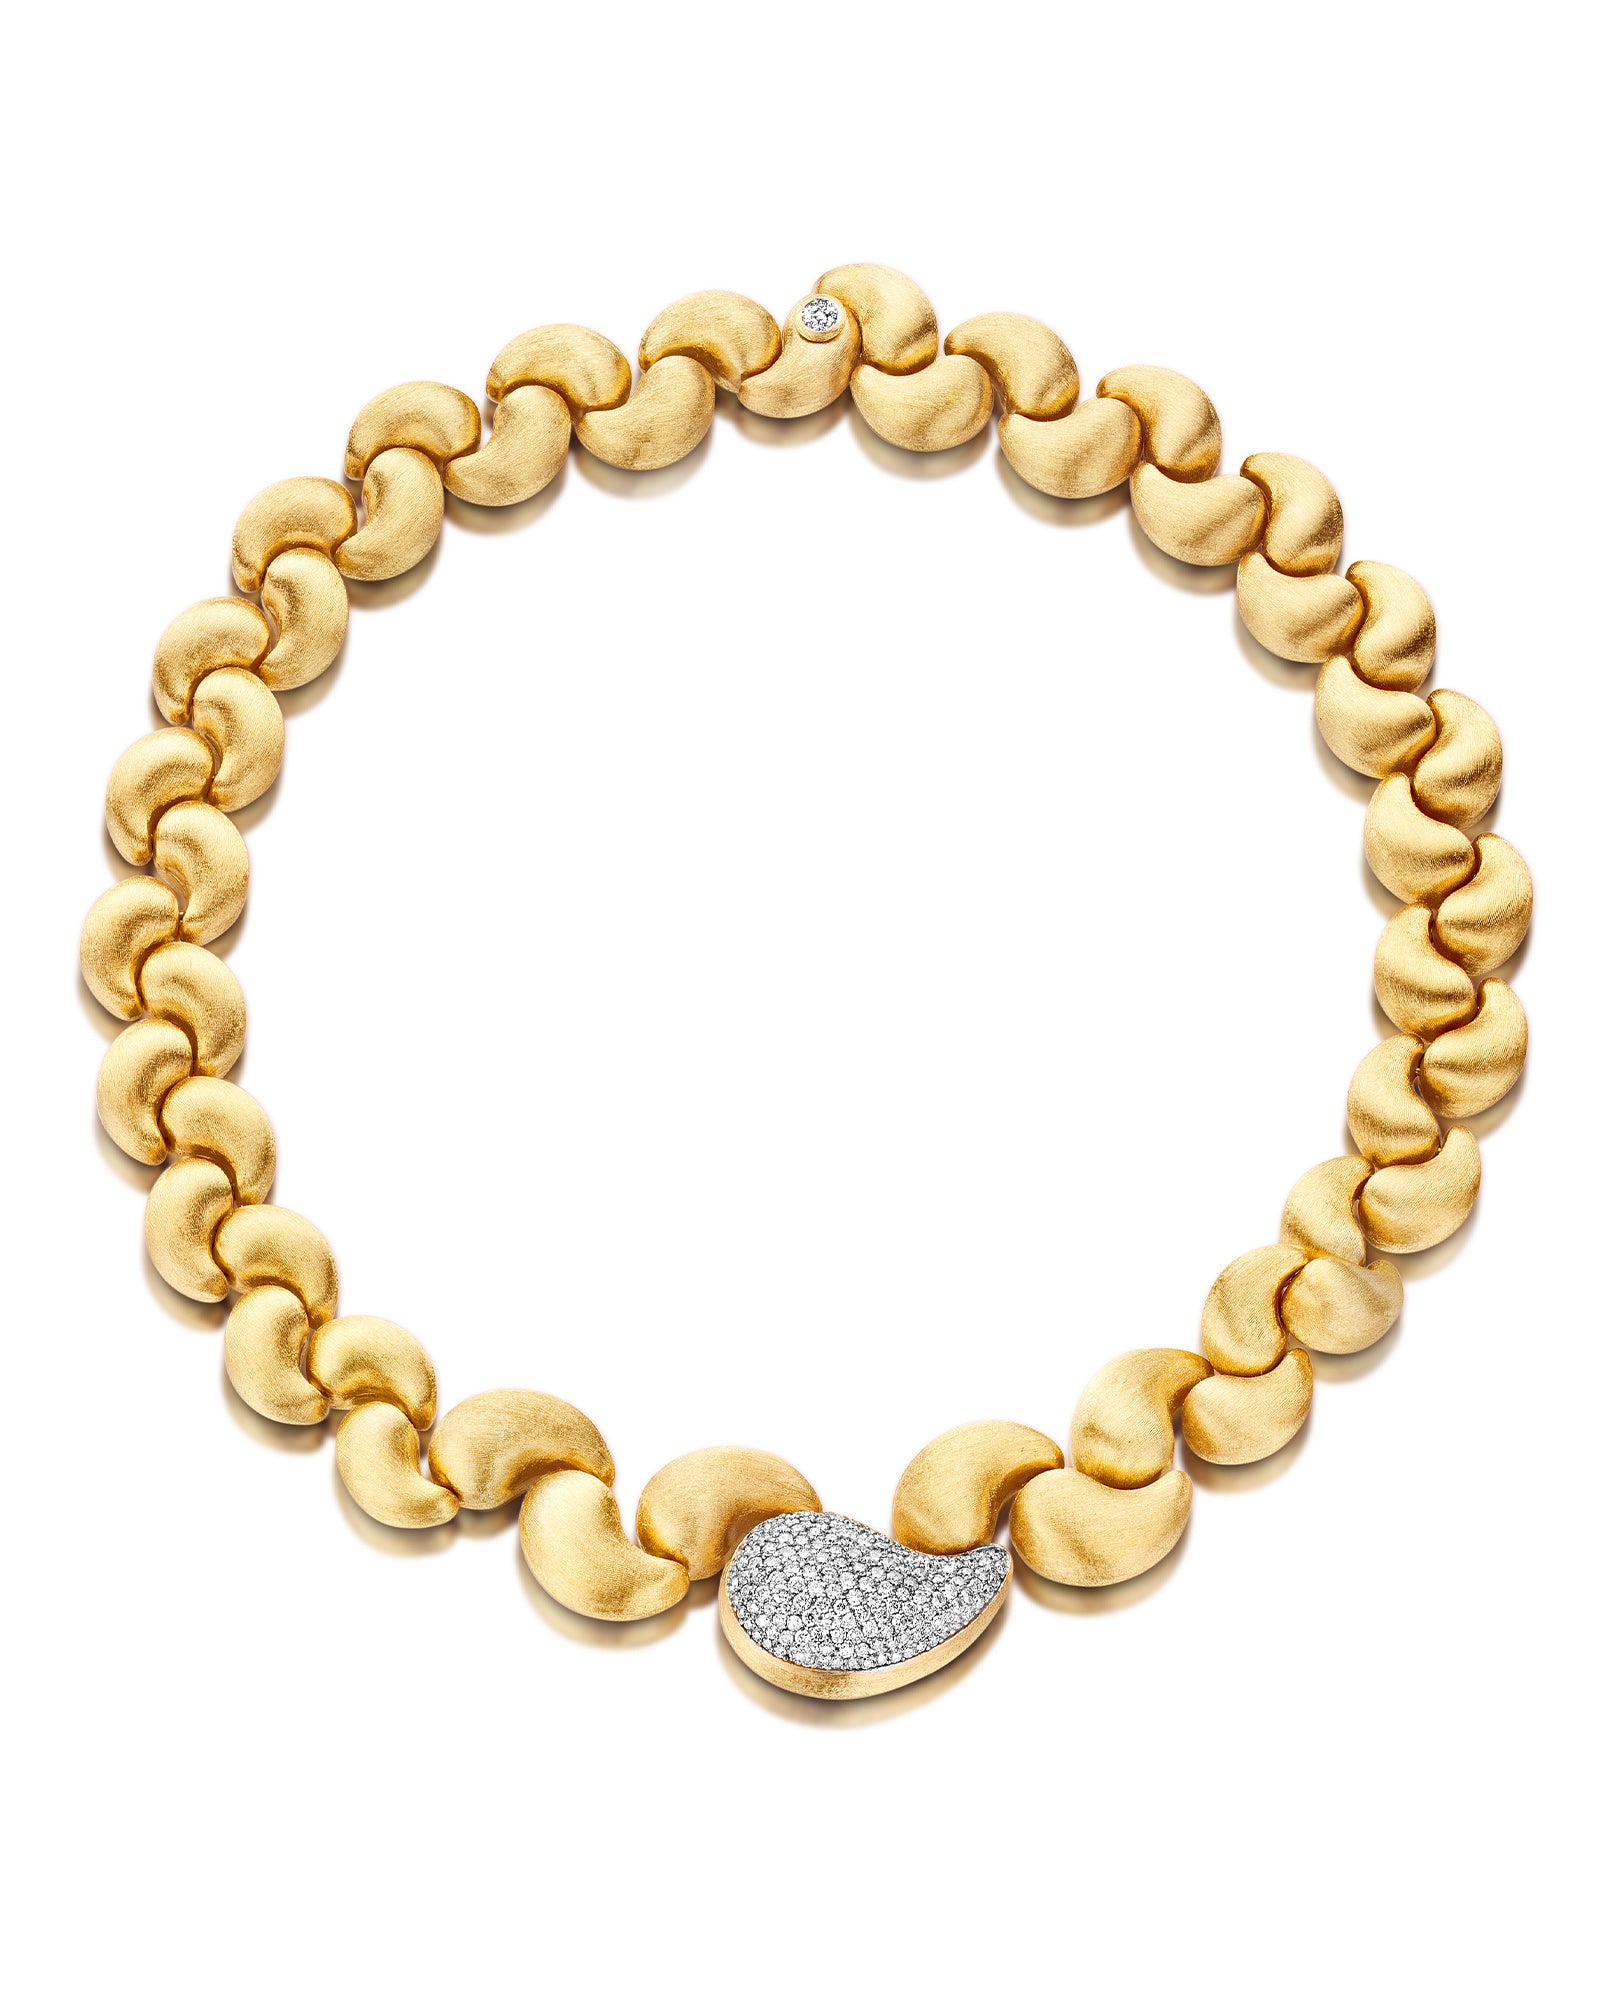 "Trasformista" Gold, Cachemire and Diamonds statement necklace